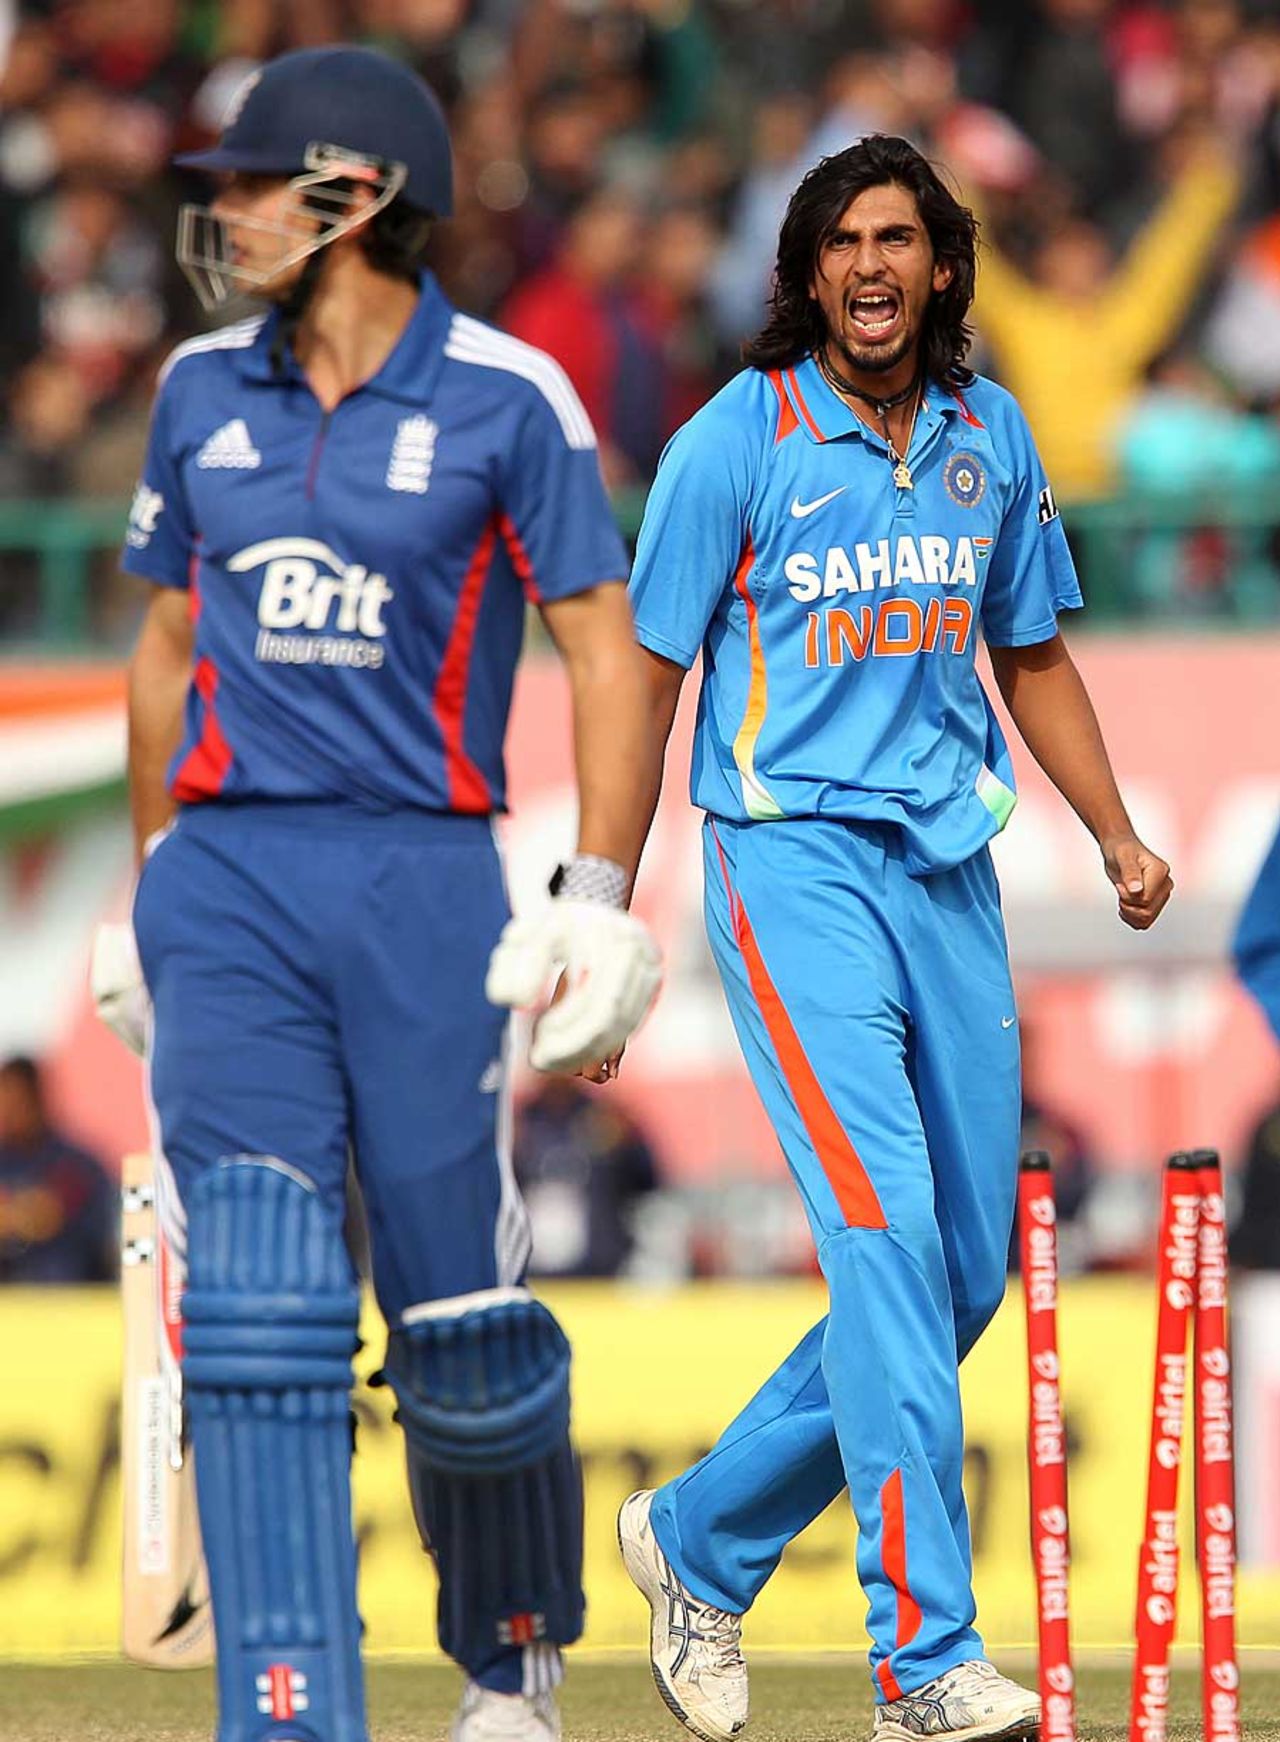 Ishant Sharma bowled Alastair Cook, India v England, 5th ODI, Dharamsala, January 27, 2013